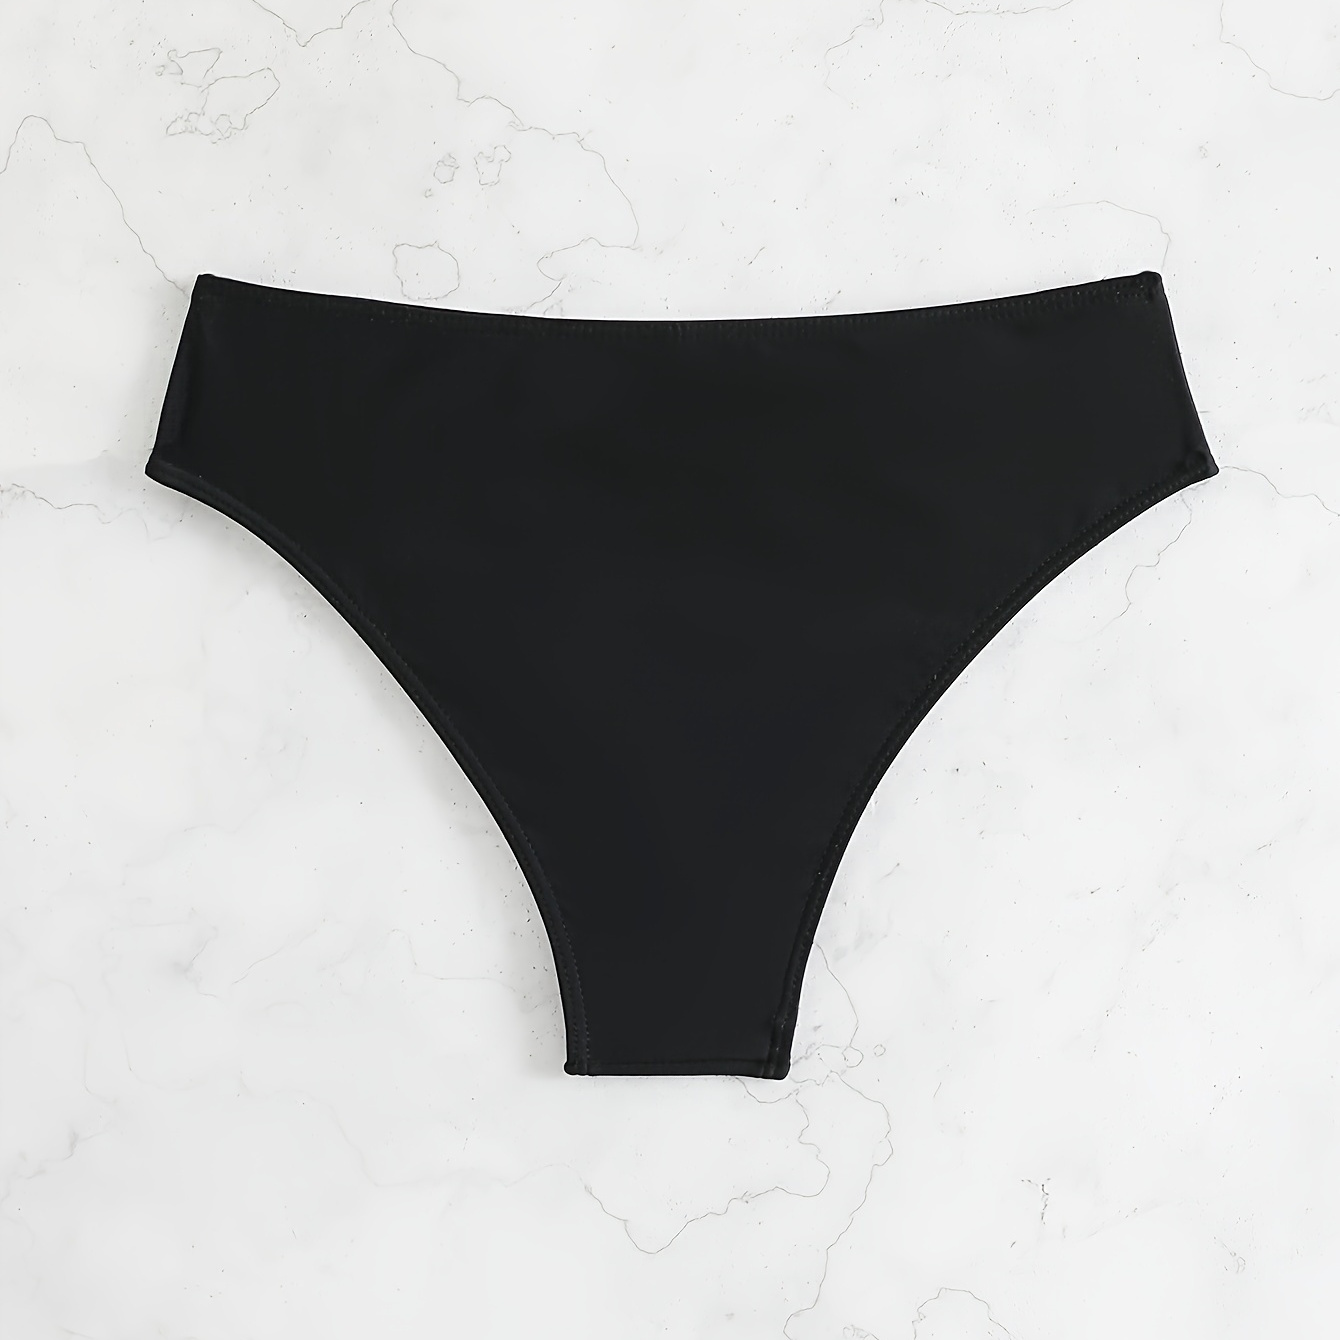 

Women's Plain Black Color Bikini Bottom, Classic Swimwear Briefs, Comfort Fit, Stretchable, Pool Beach Essential